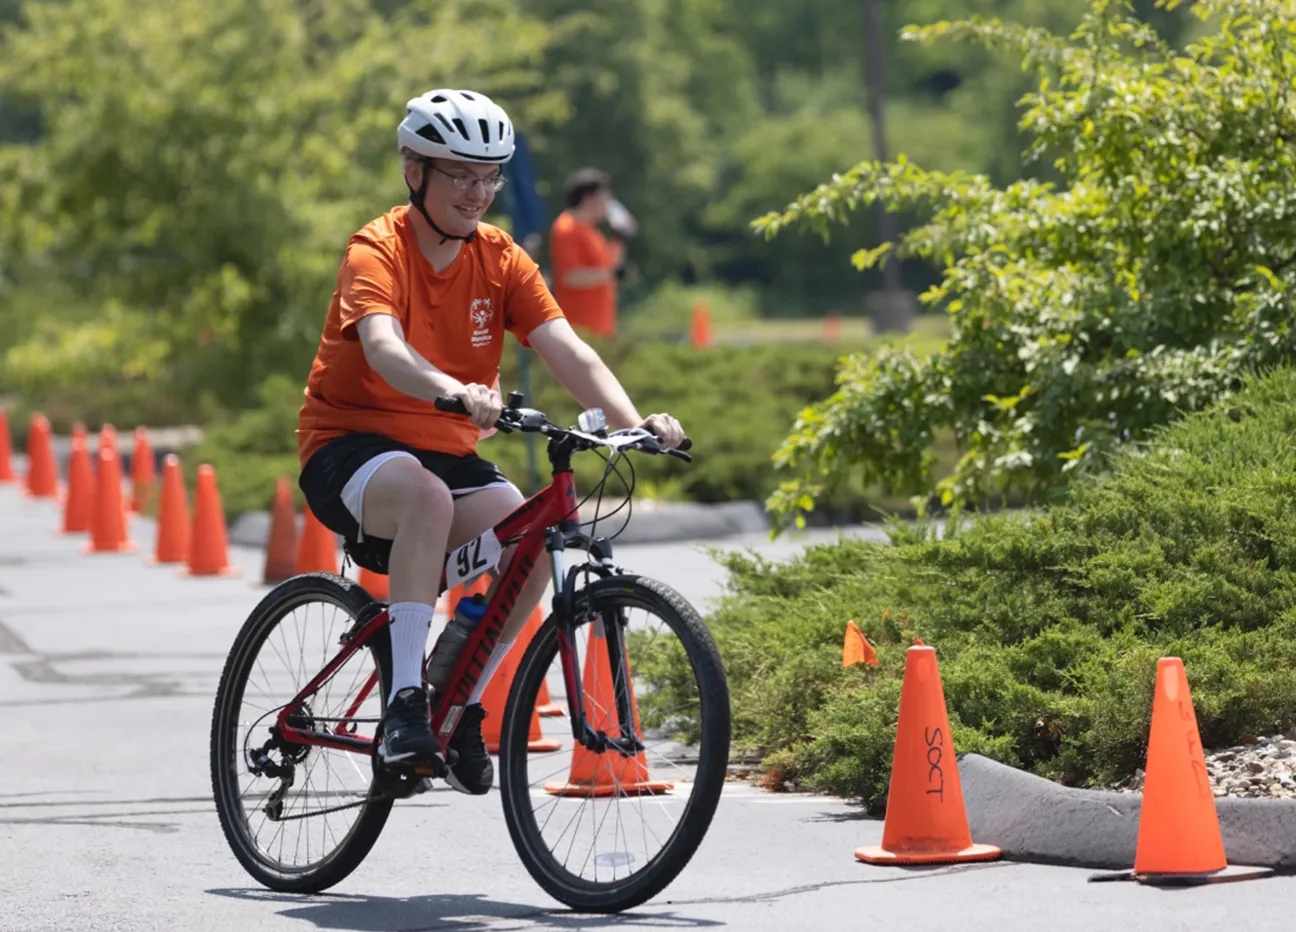 Athlete on a bike wearing an orange shirt near green trees.